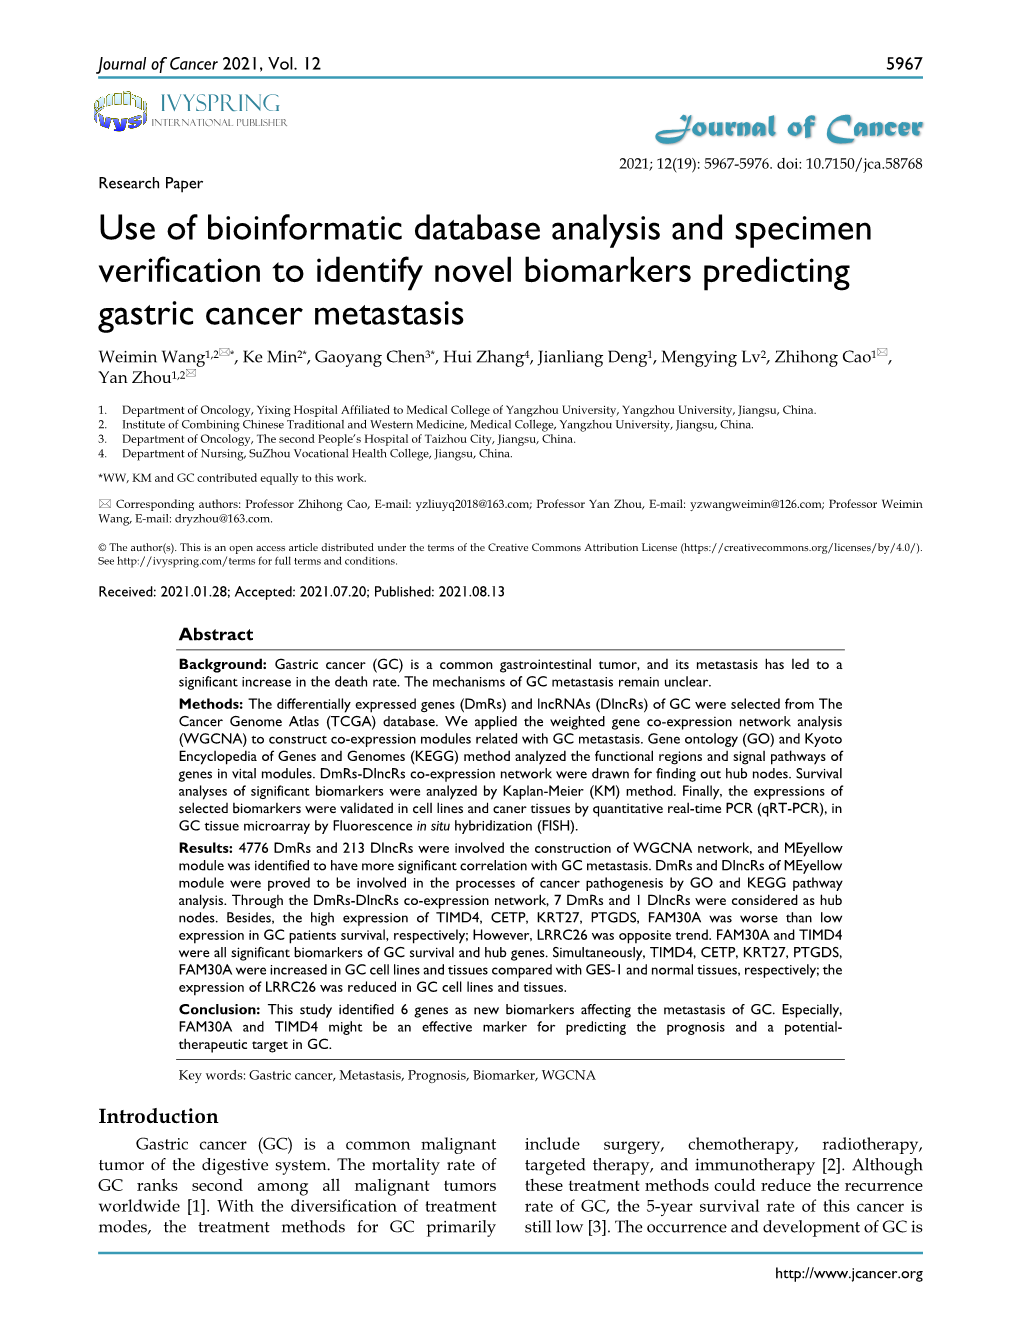 Use of Bioinformatic Database Analysis and Specimen Verification